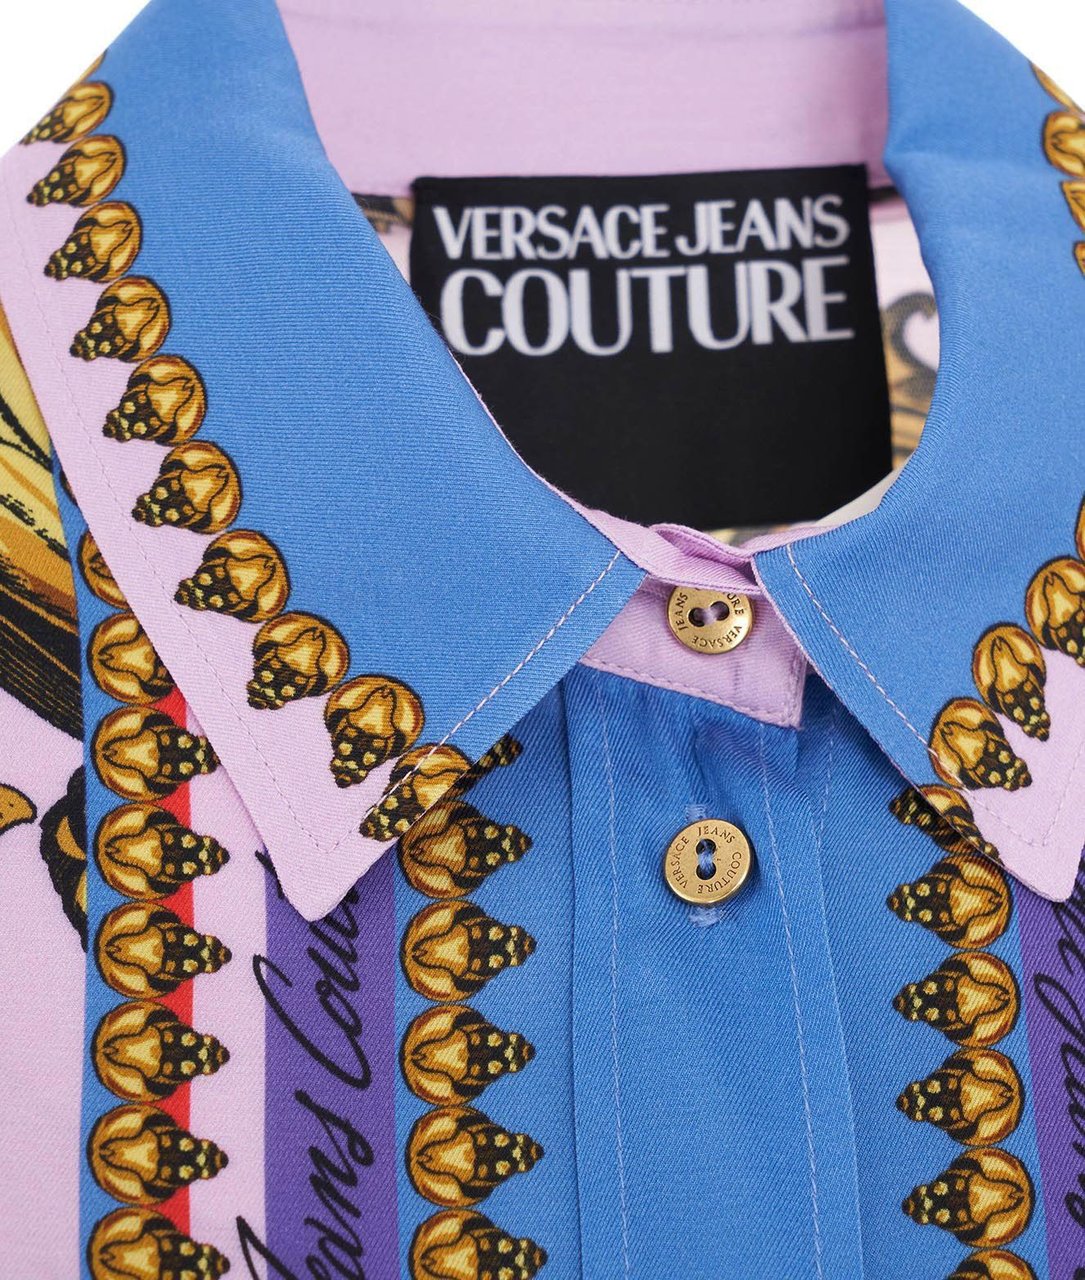 Versace Jeans Couture Garland Print Blouse Blue Divers